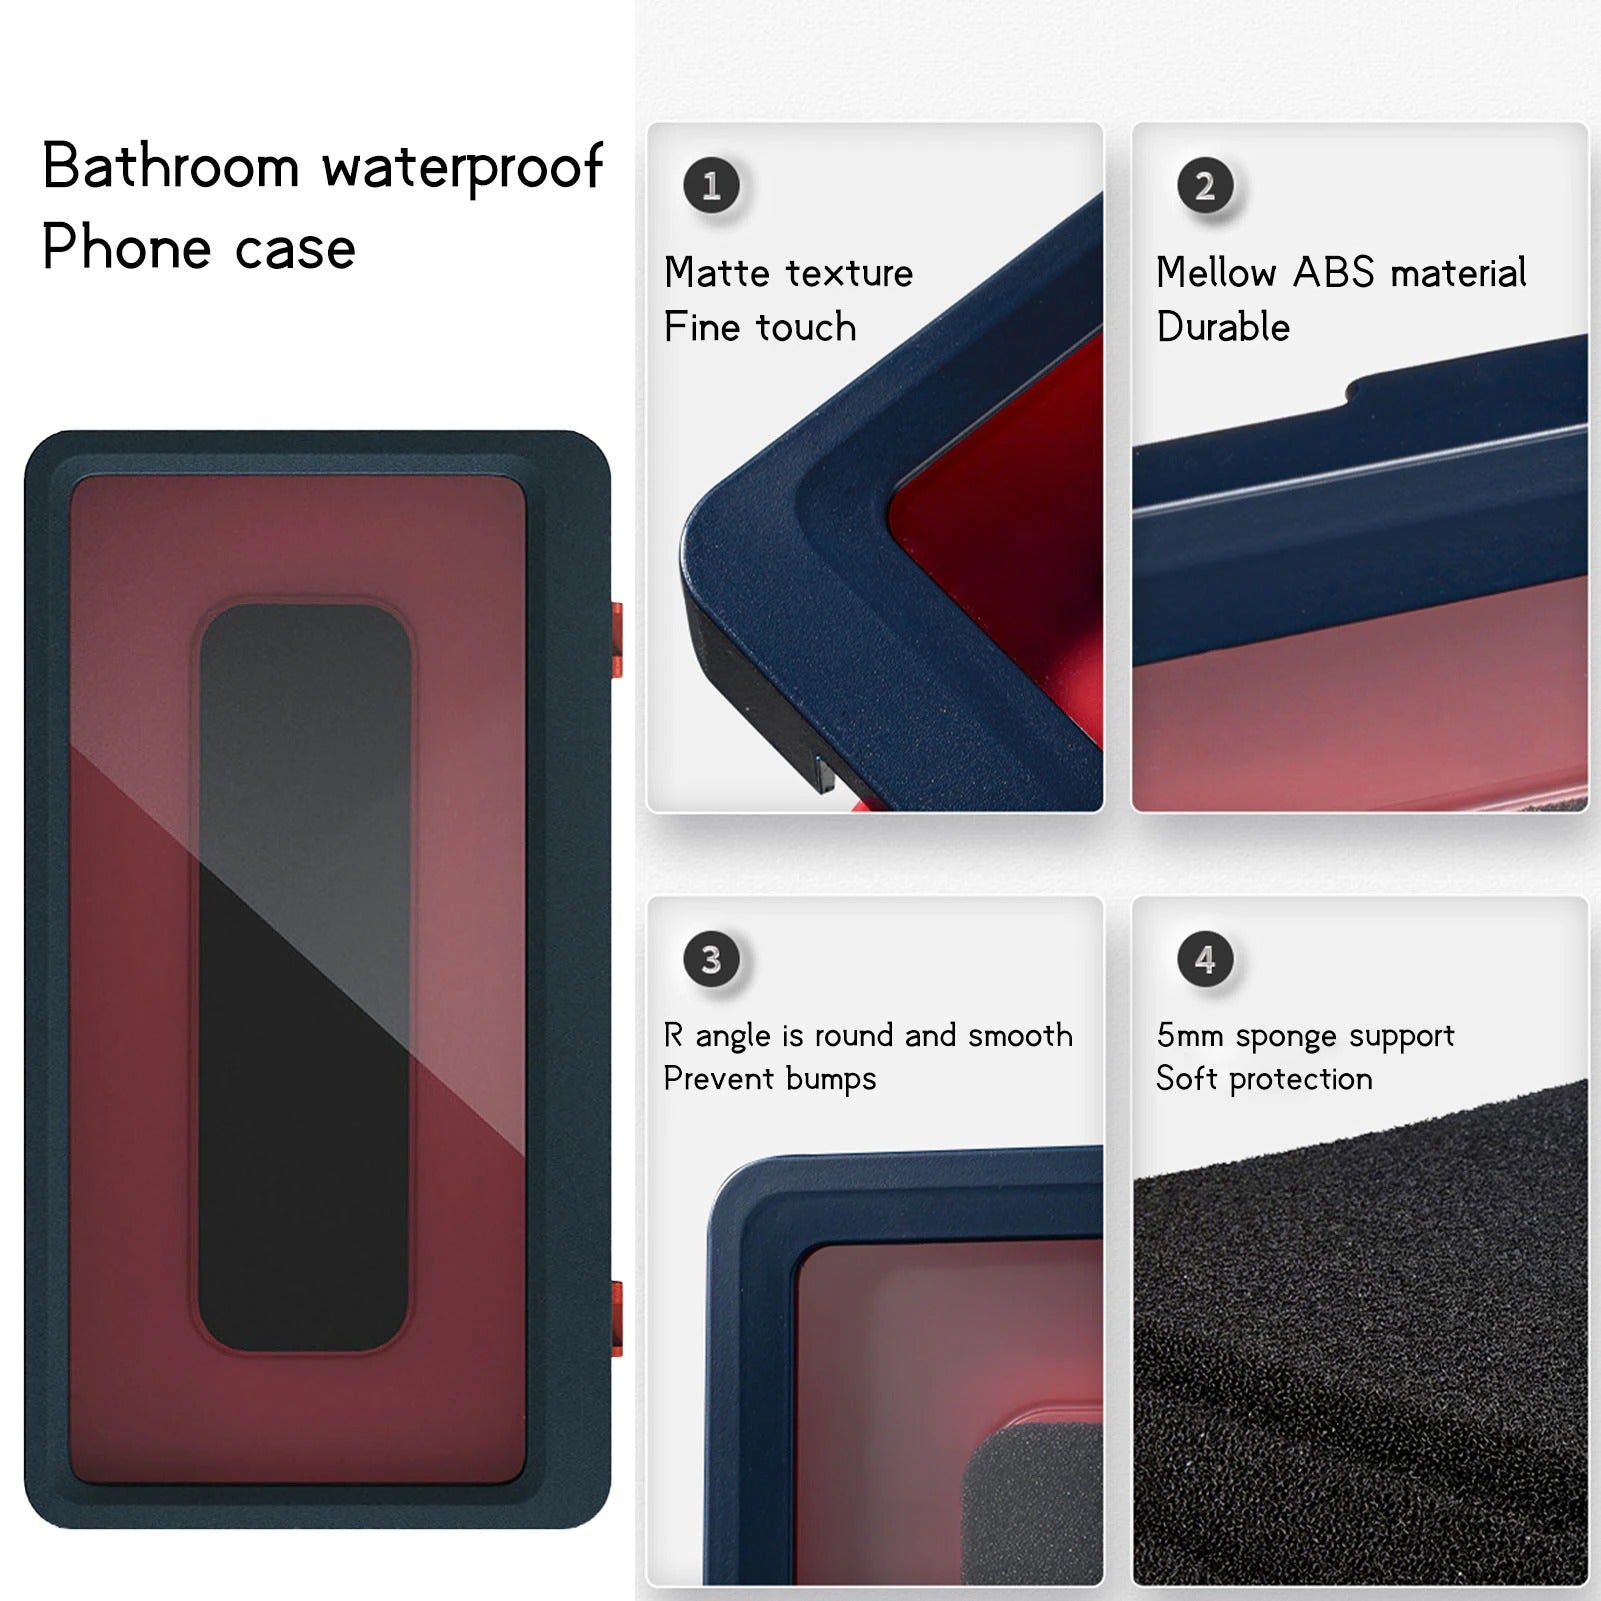 Waterproof Phones Storager Bath Wall Mounted Holder